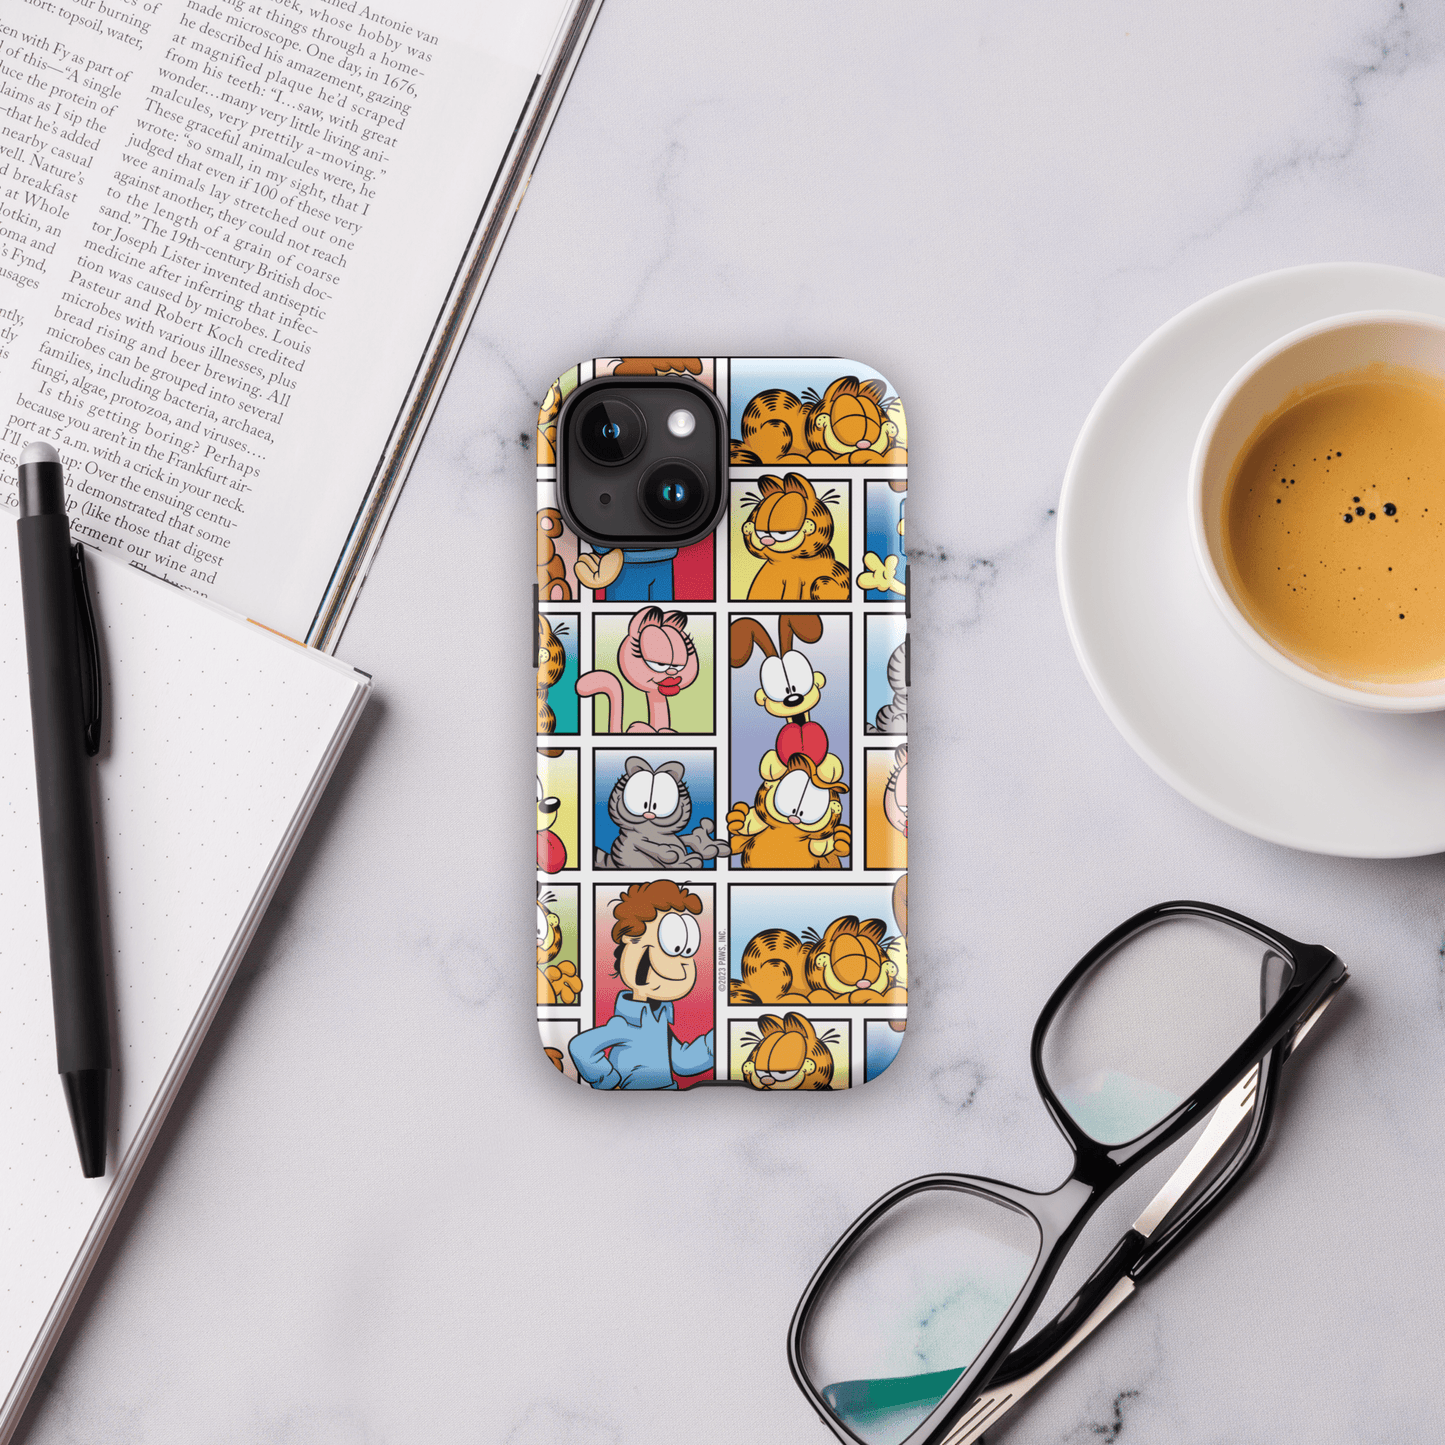 Garfield Comic Strip Characters Tough Phone Case - iPhone - Paramount Shop